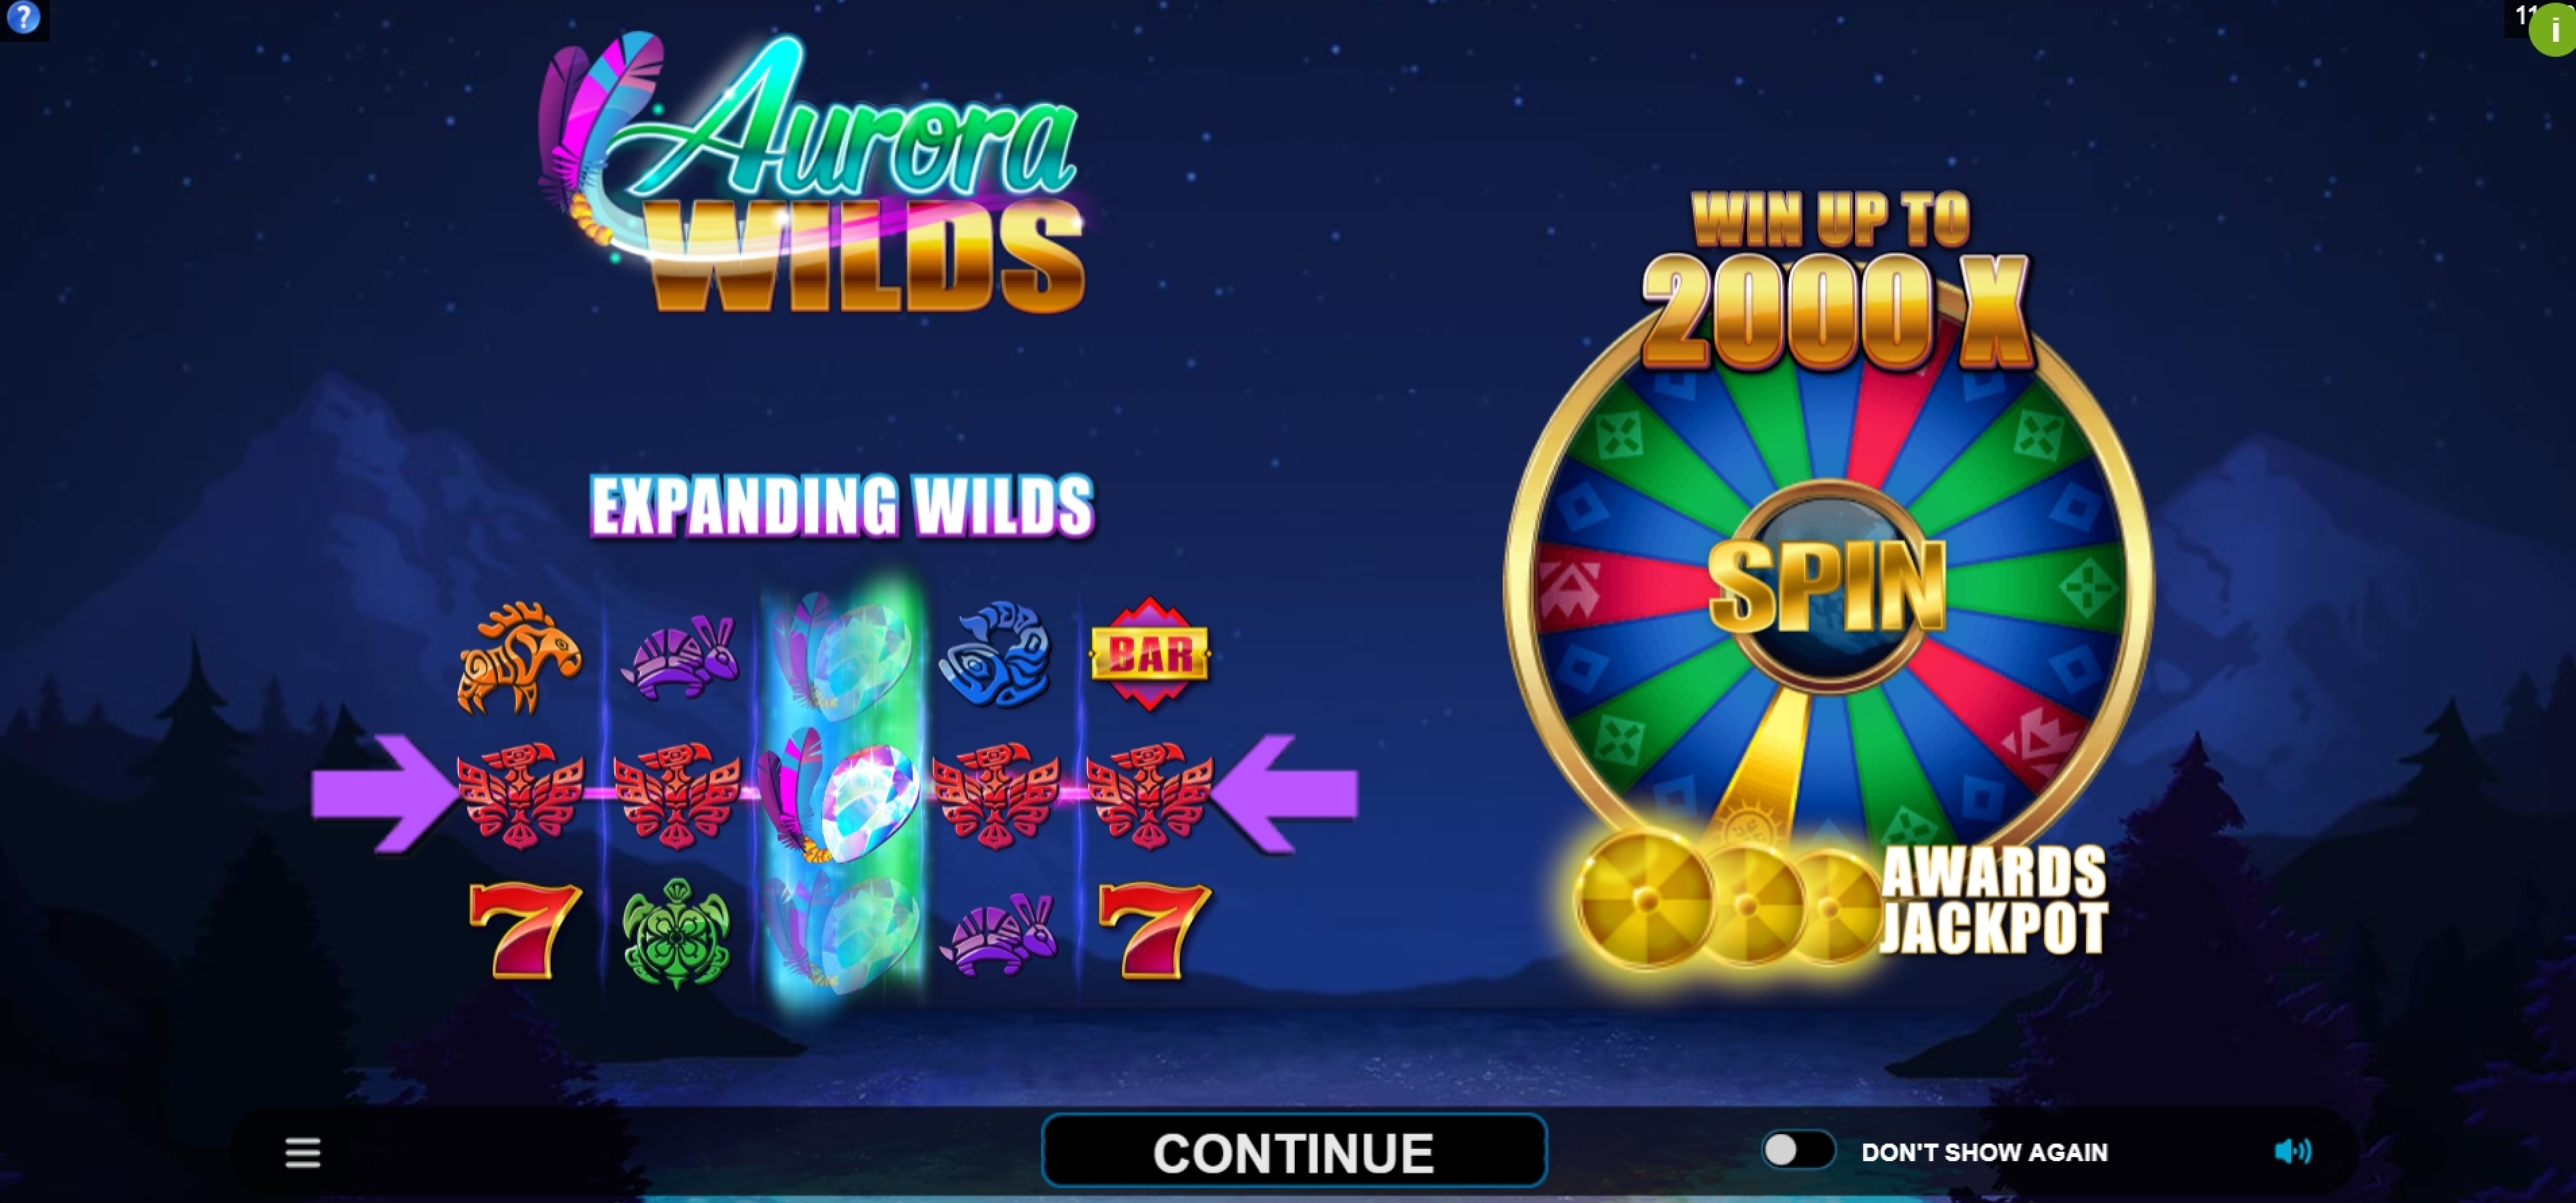 Play Aurora Wilds Free Casino Slot Game by Neon Valley Studios